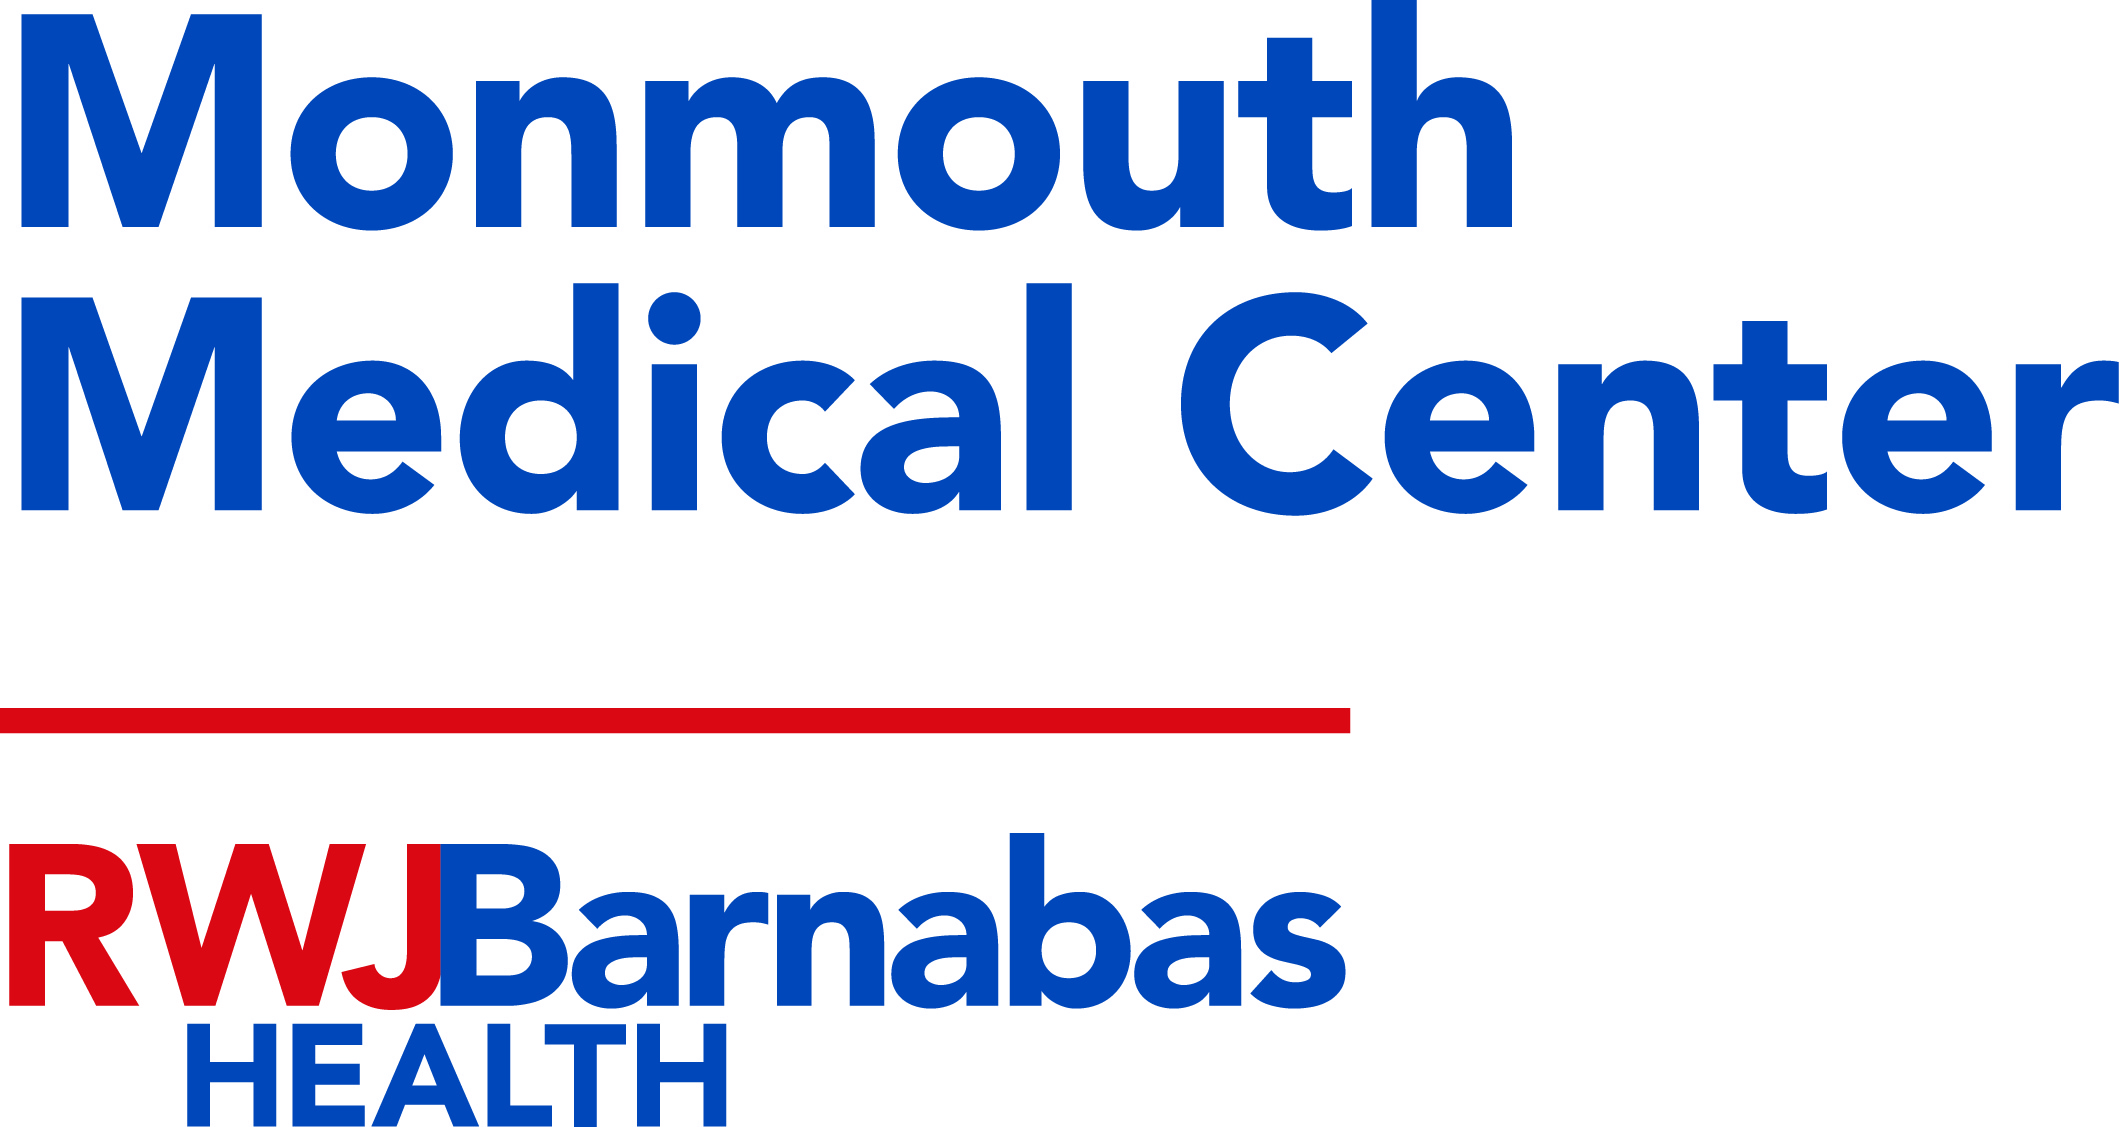 Monmouth Medical Center